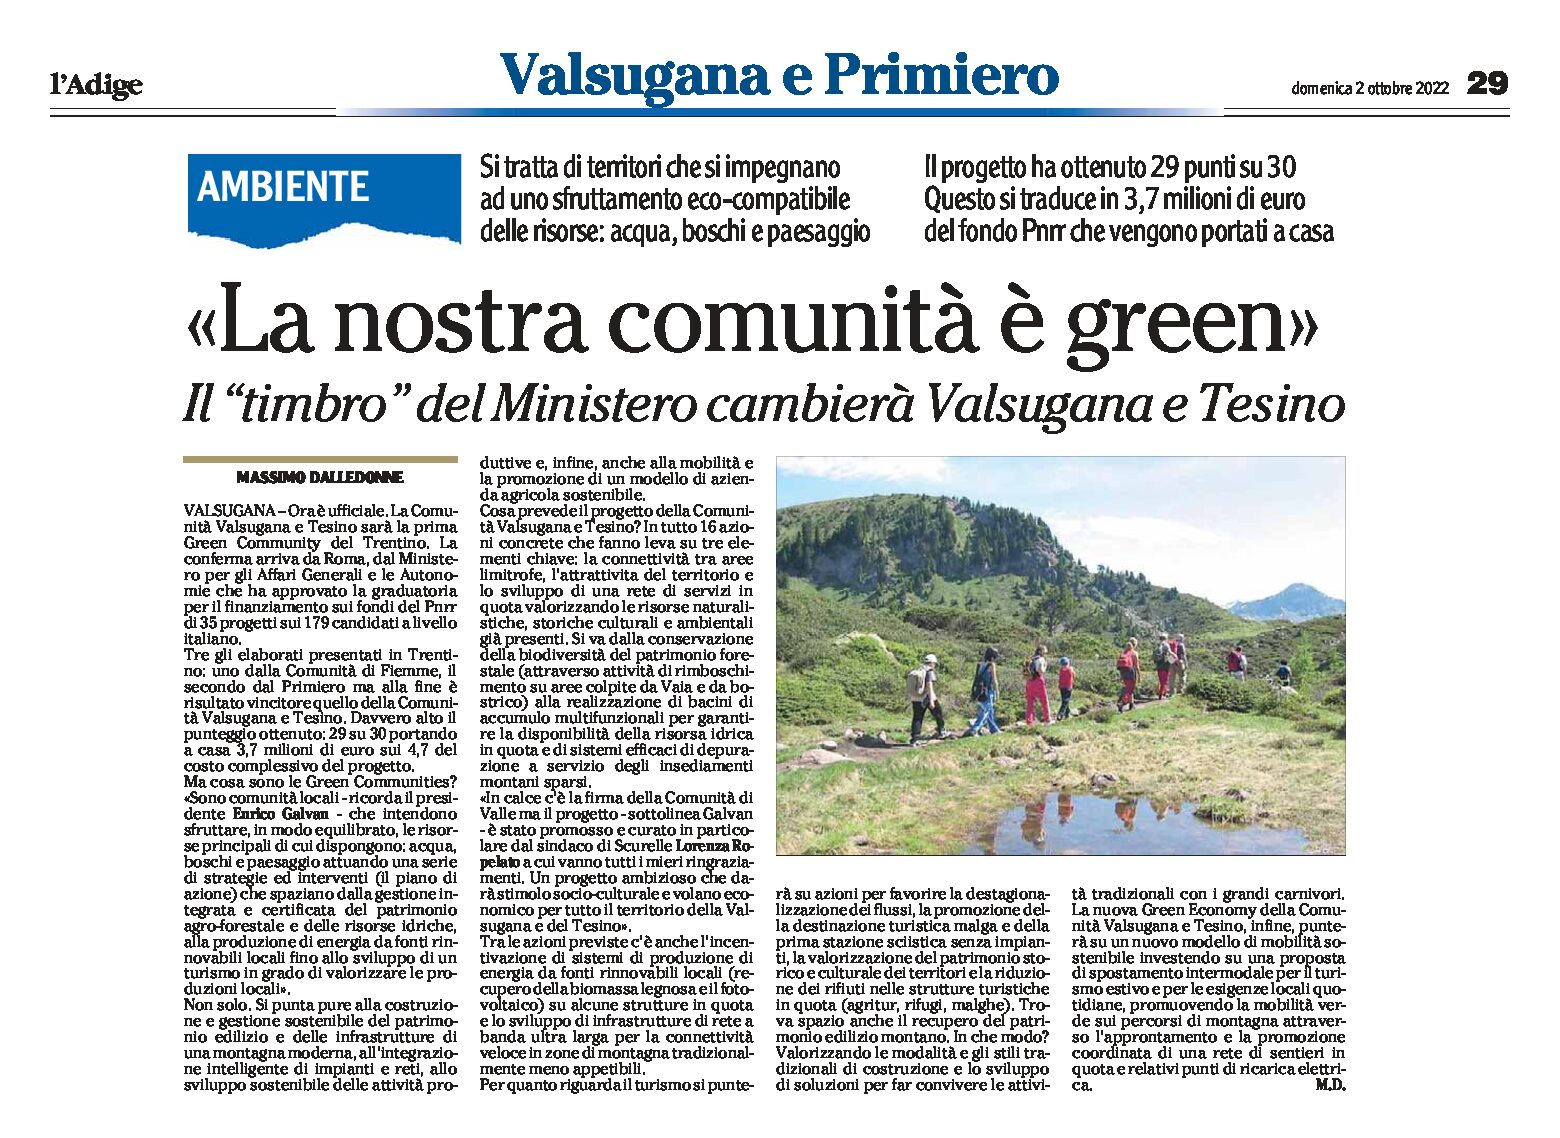 Valsugana e Tesino: “la nostra comunità è green”